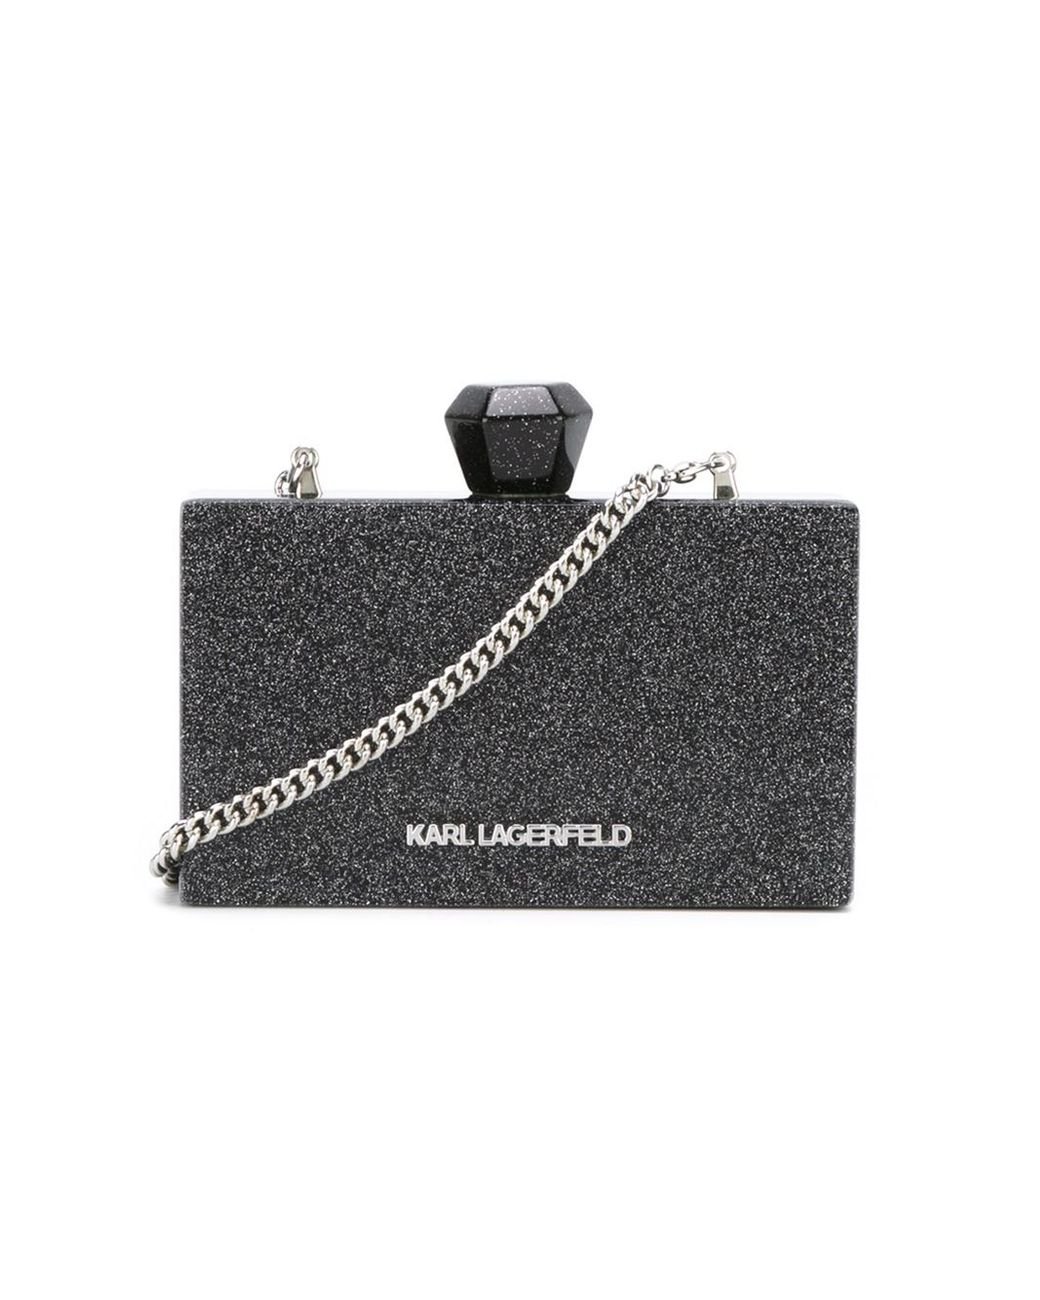 Karl Lagerfeld 'luxury Is A Discipline' Box Clutch in Black | Lyst